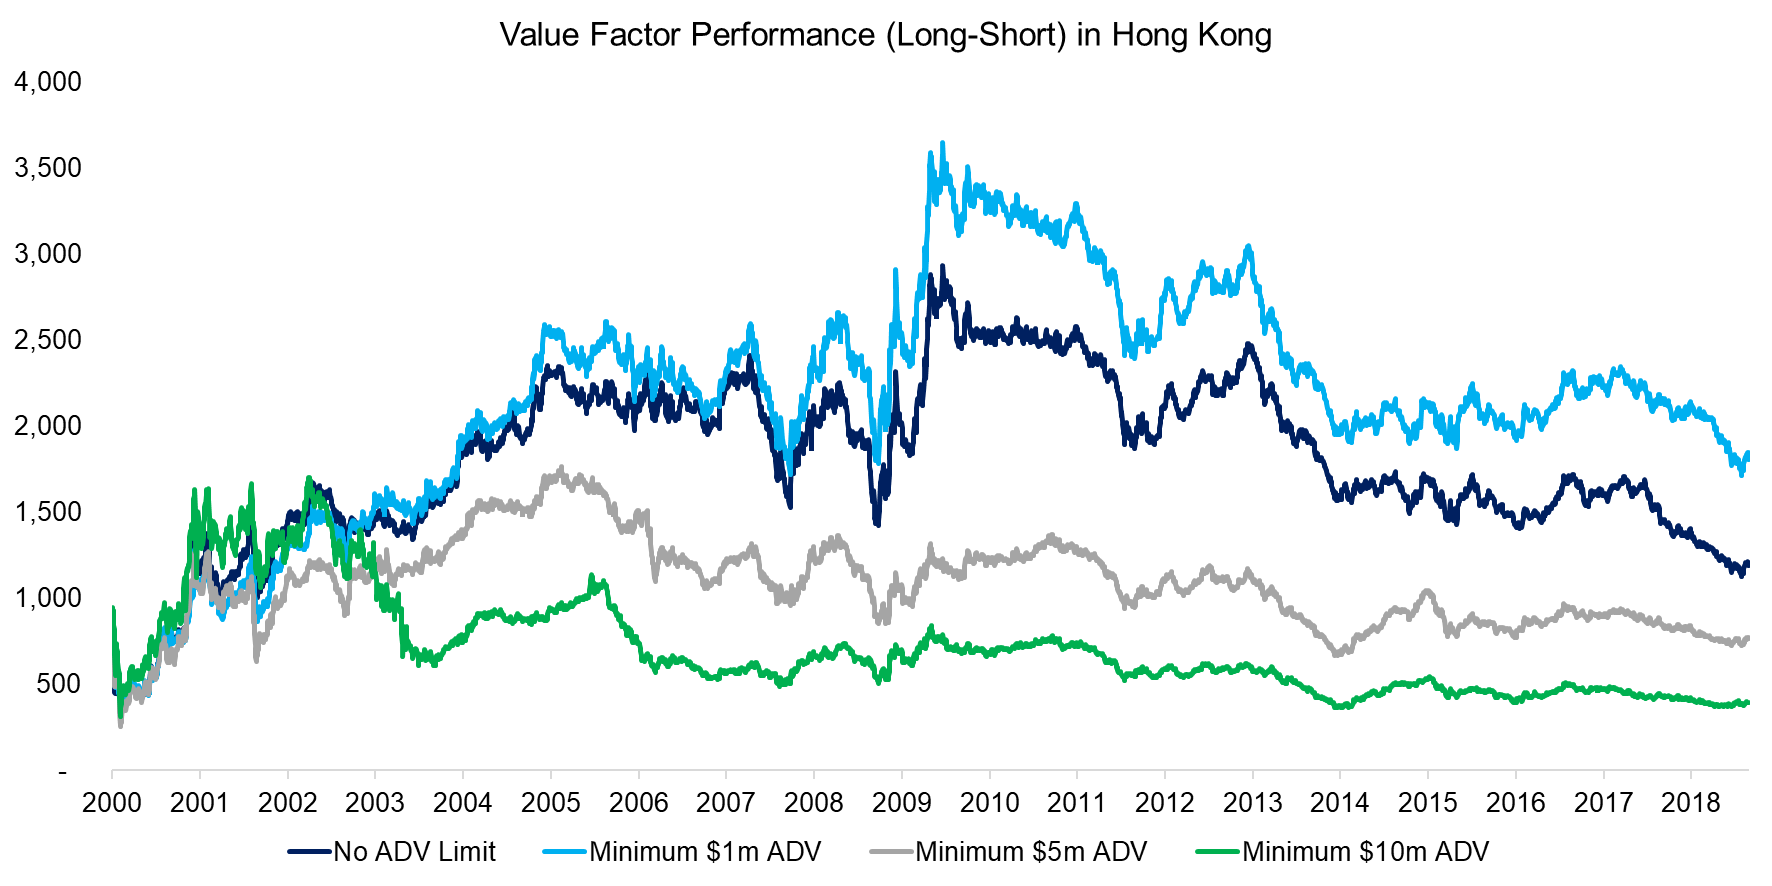 Value Factor Performance (Long-Short) in Hong Kong